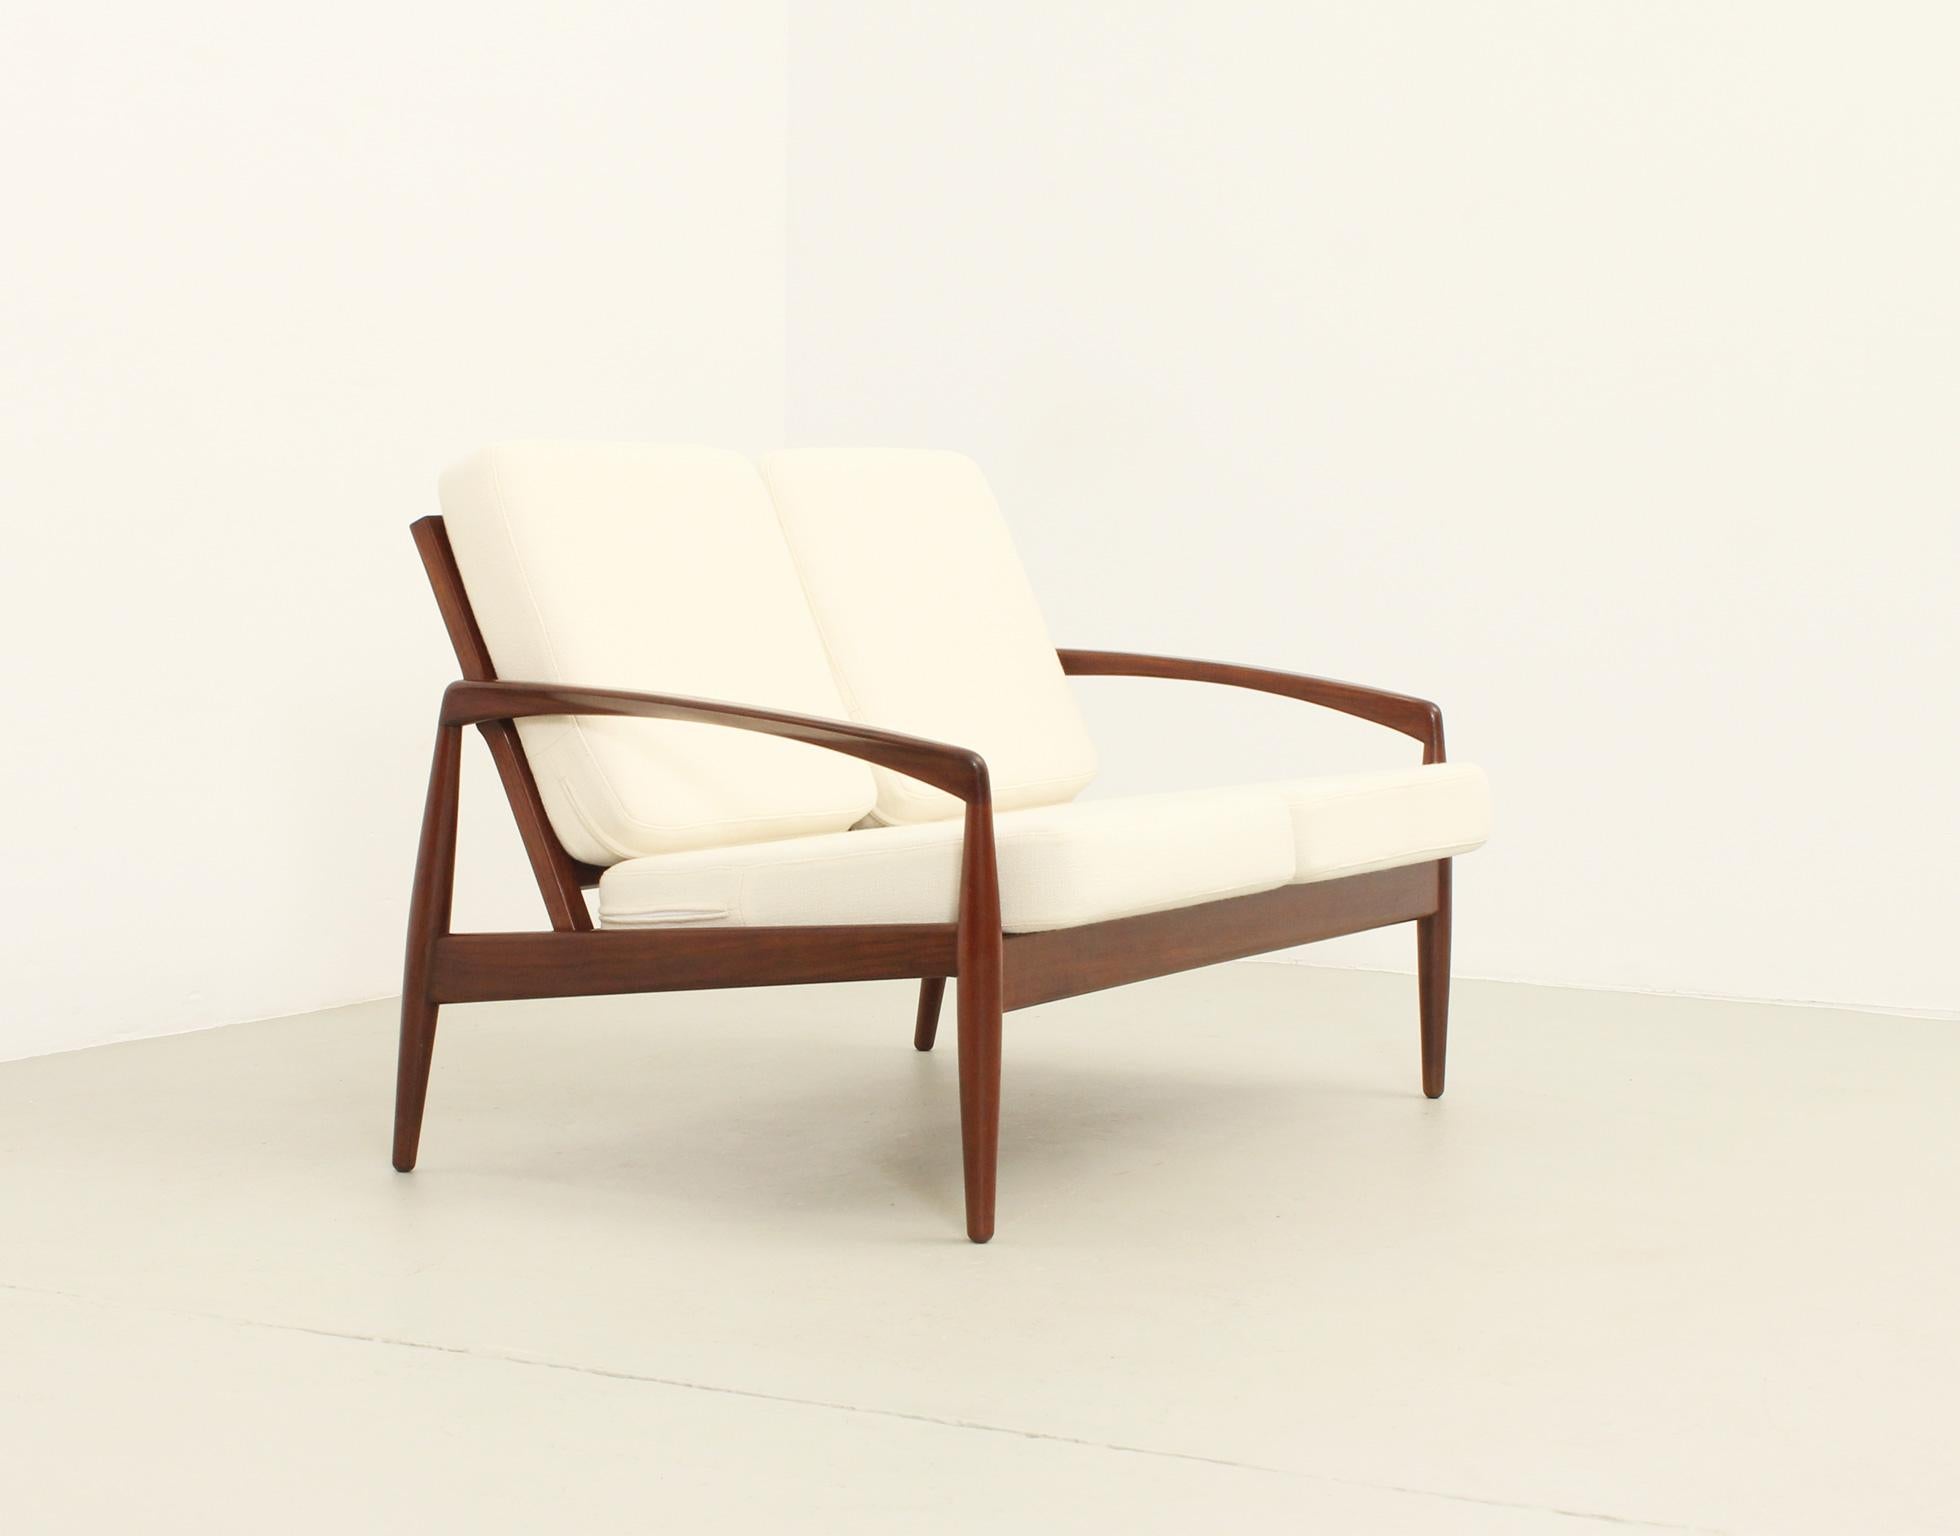 Two seater Paper Knife sofa designed in 1956 by Kai Kristiansen for Magnus Olesen, Denmark. Teak frame upholstered with new wool fabric from Kvadrat.